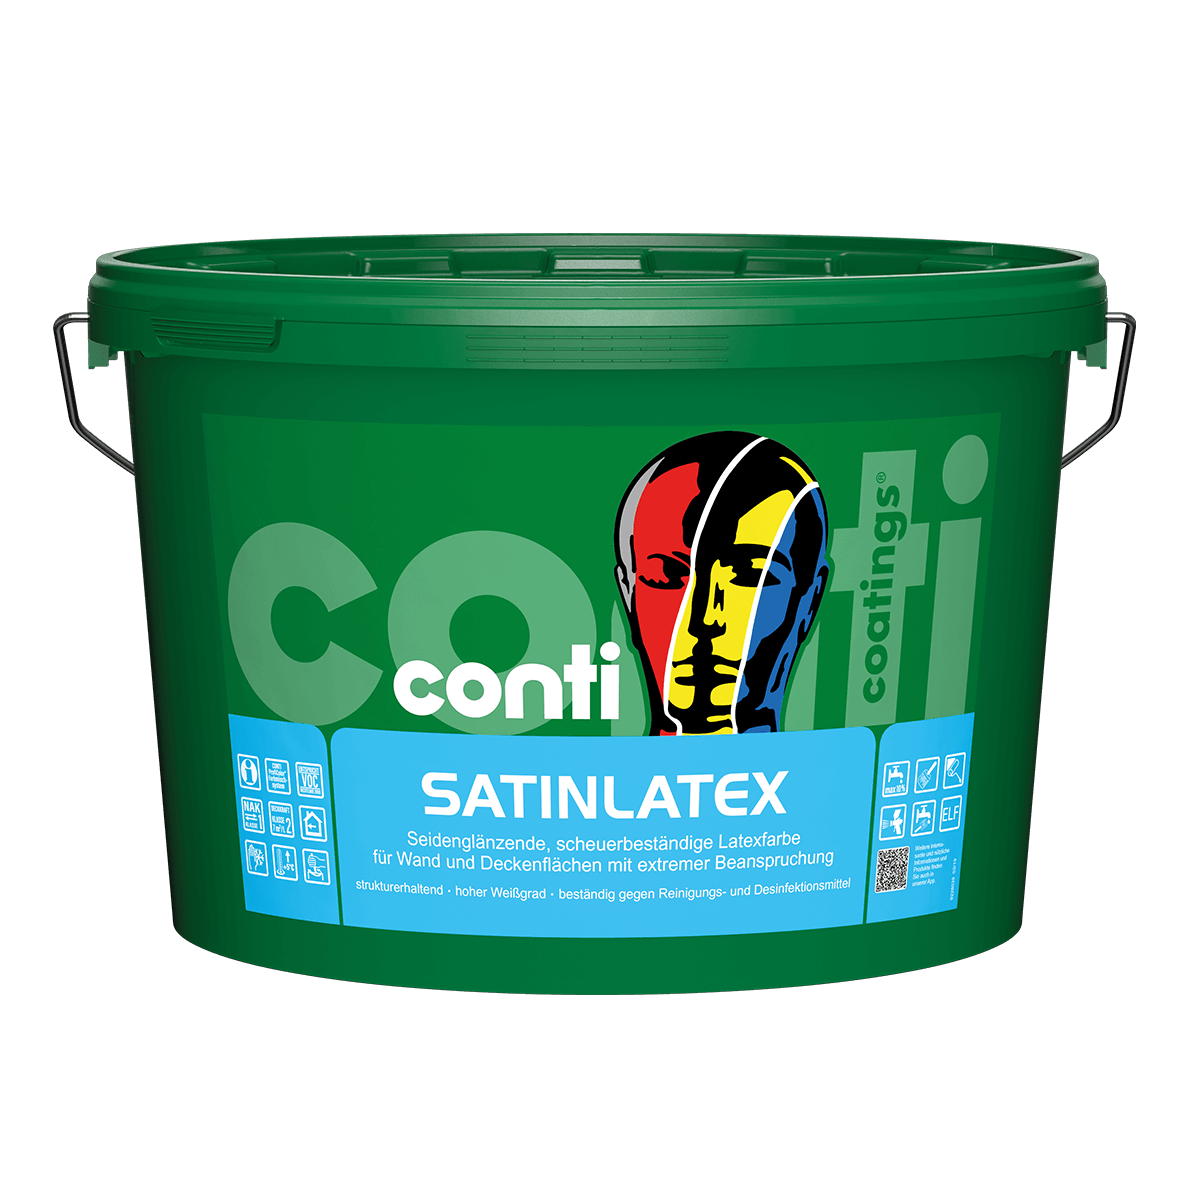 Conti® SatinLatex altweiß Latexfarbe von conti coatings